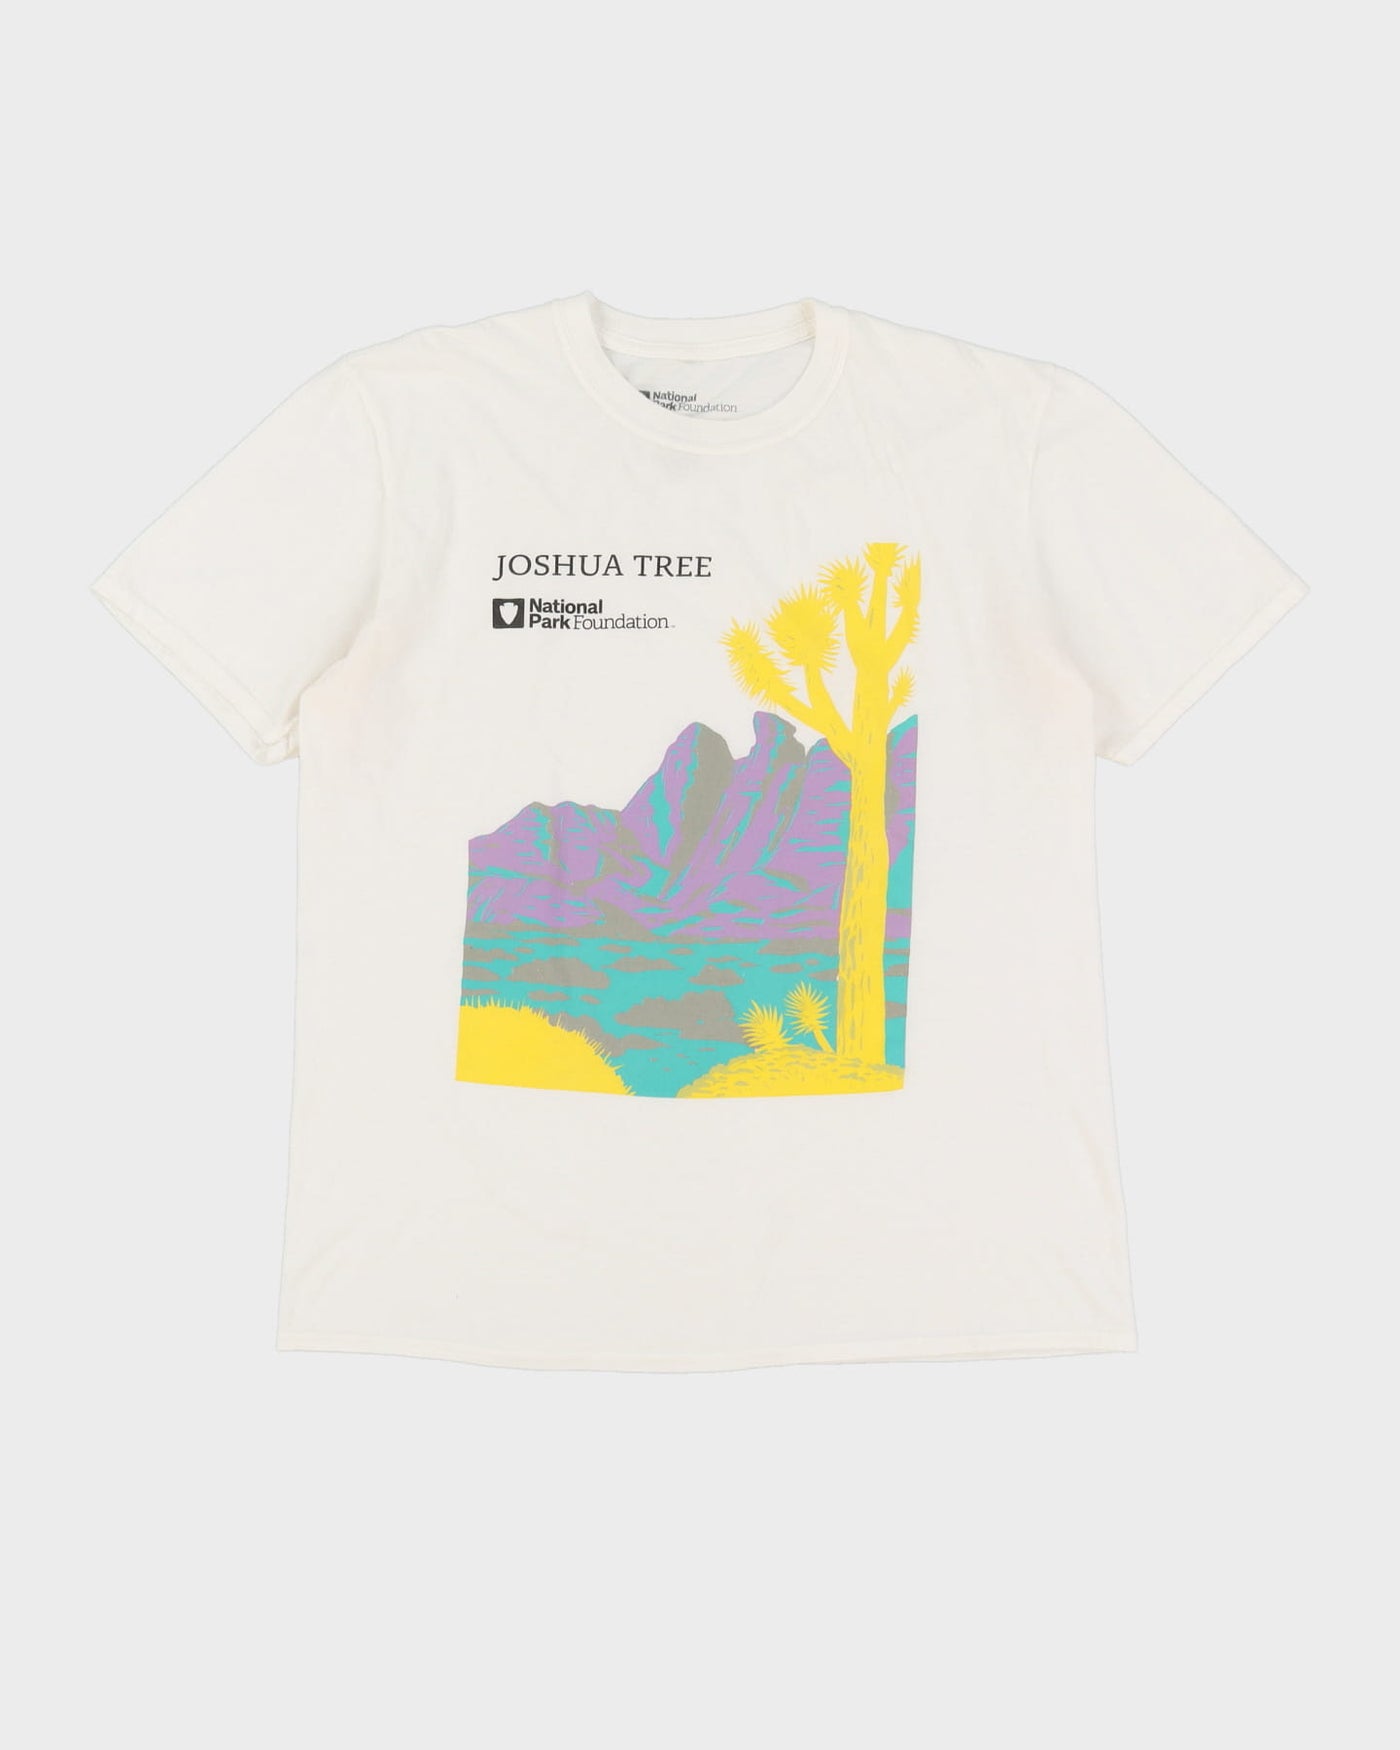 Joshua Tree National Park White Graphic T-Shirt - M / L